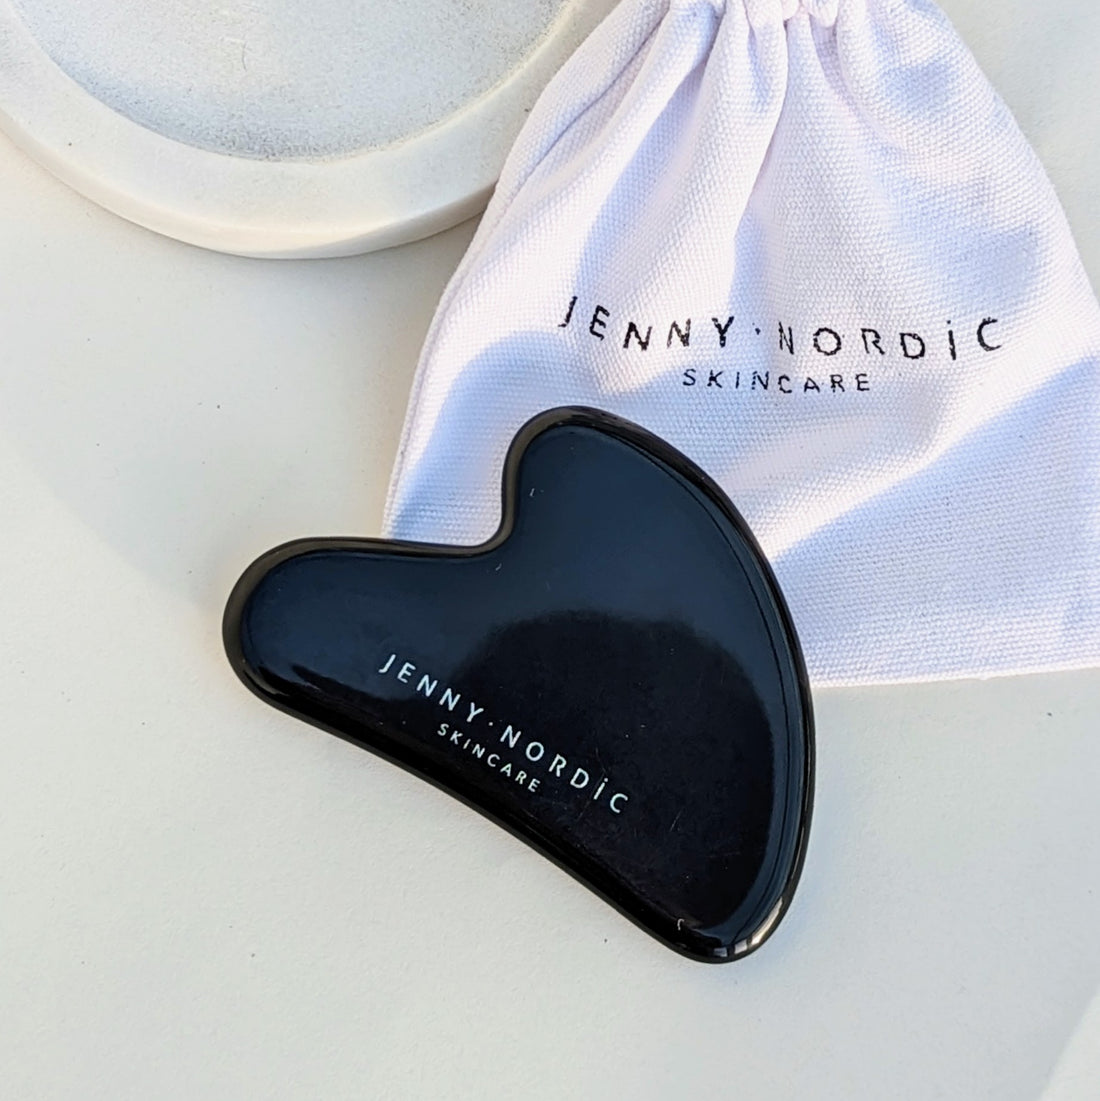 Jenny Nordic Skincare Black Obsidian Gua Sha Tool for Face